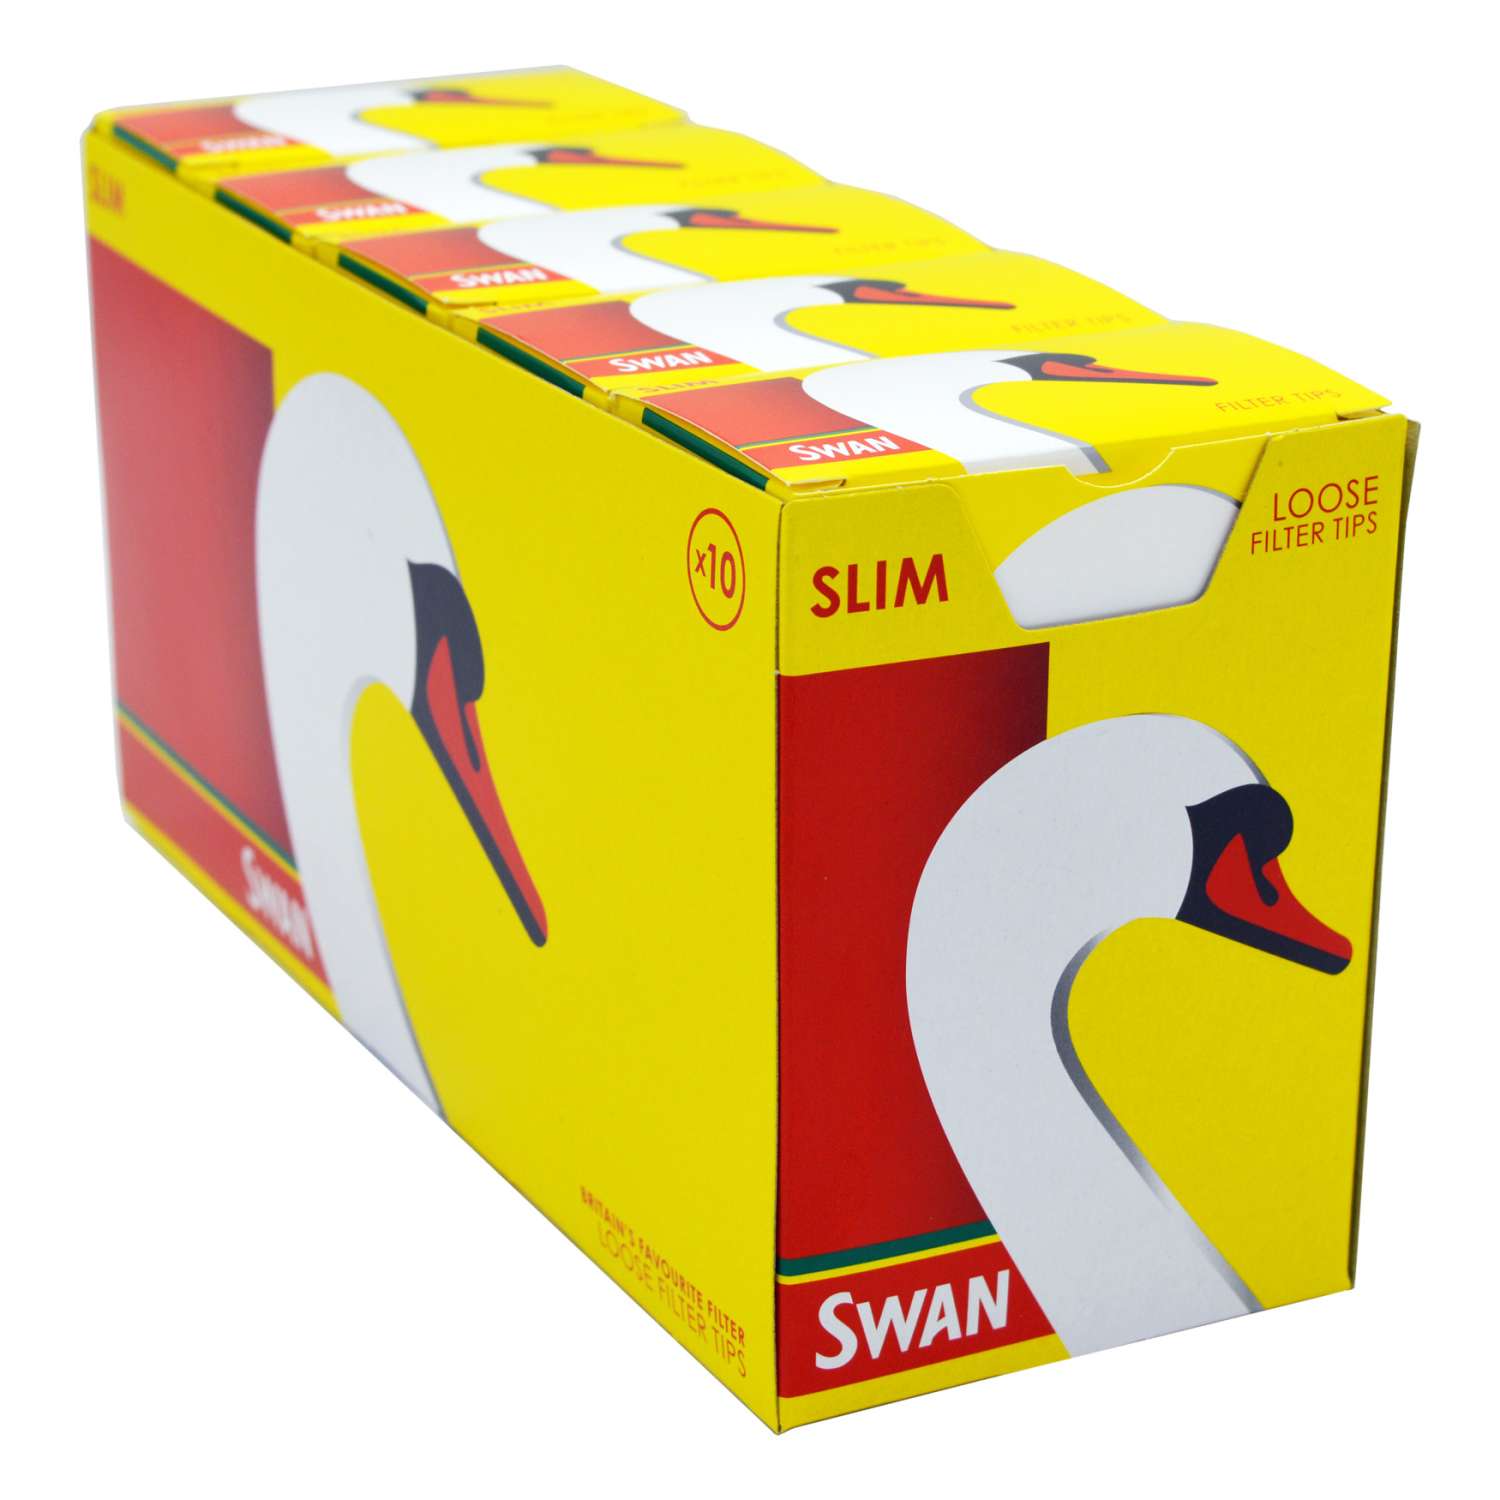 Swan Slim Loose Filter Tips 165's x 10